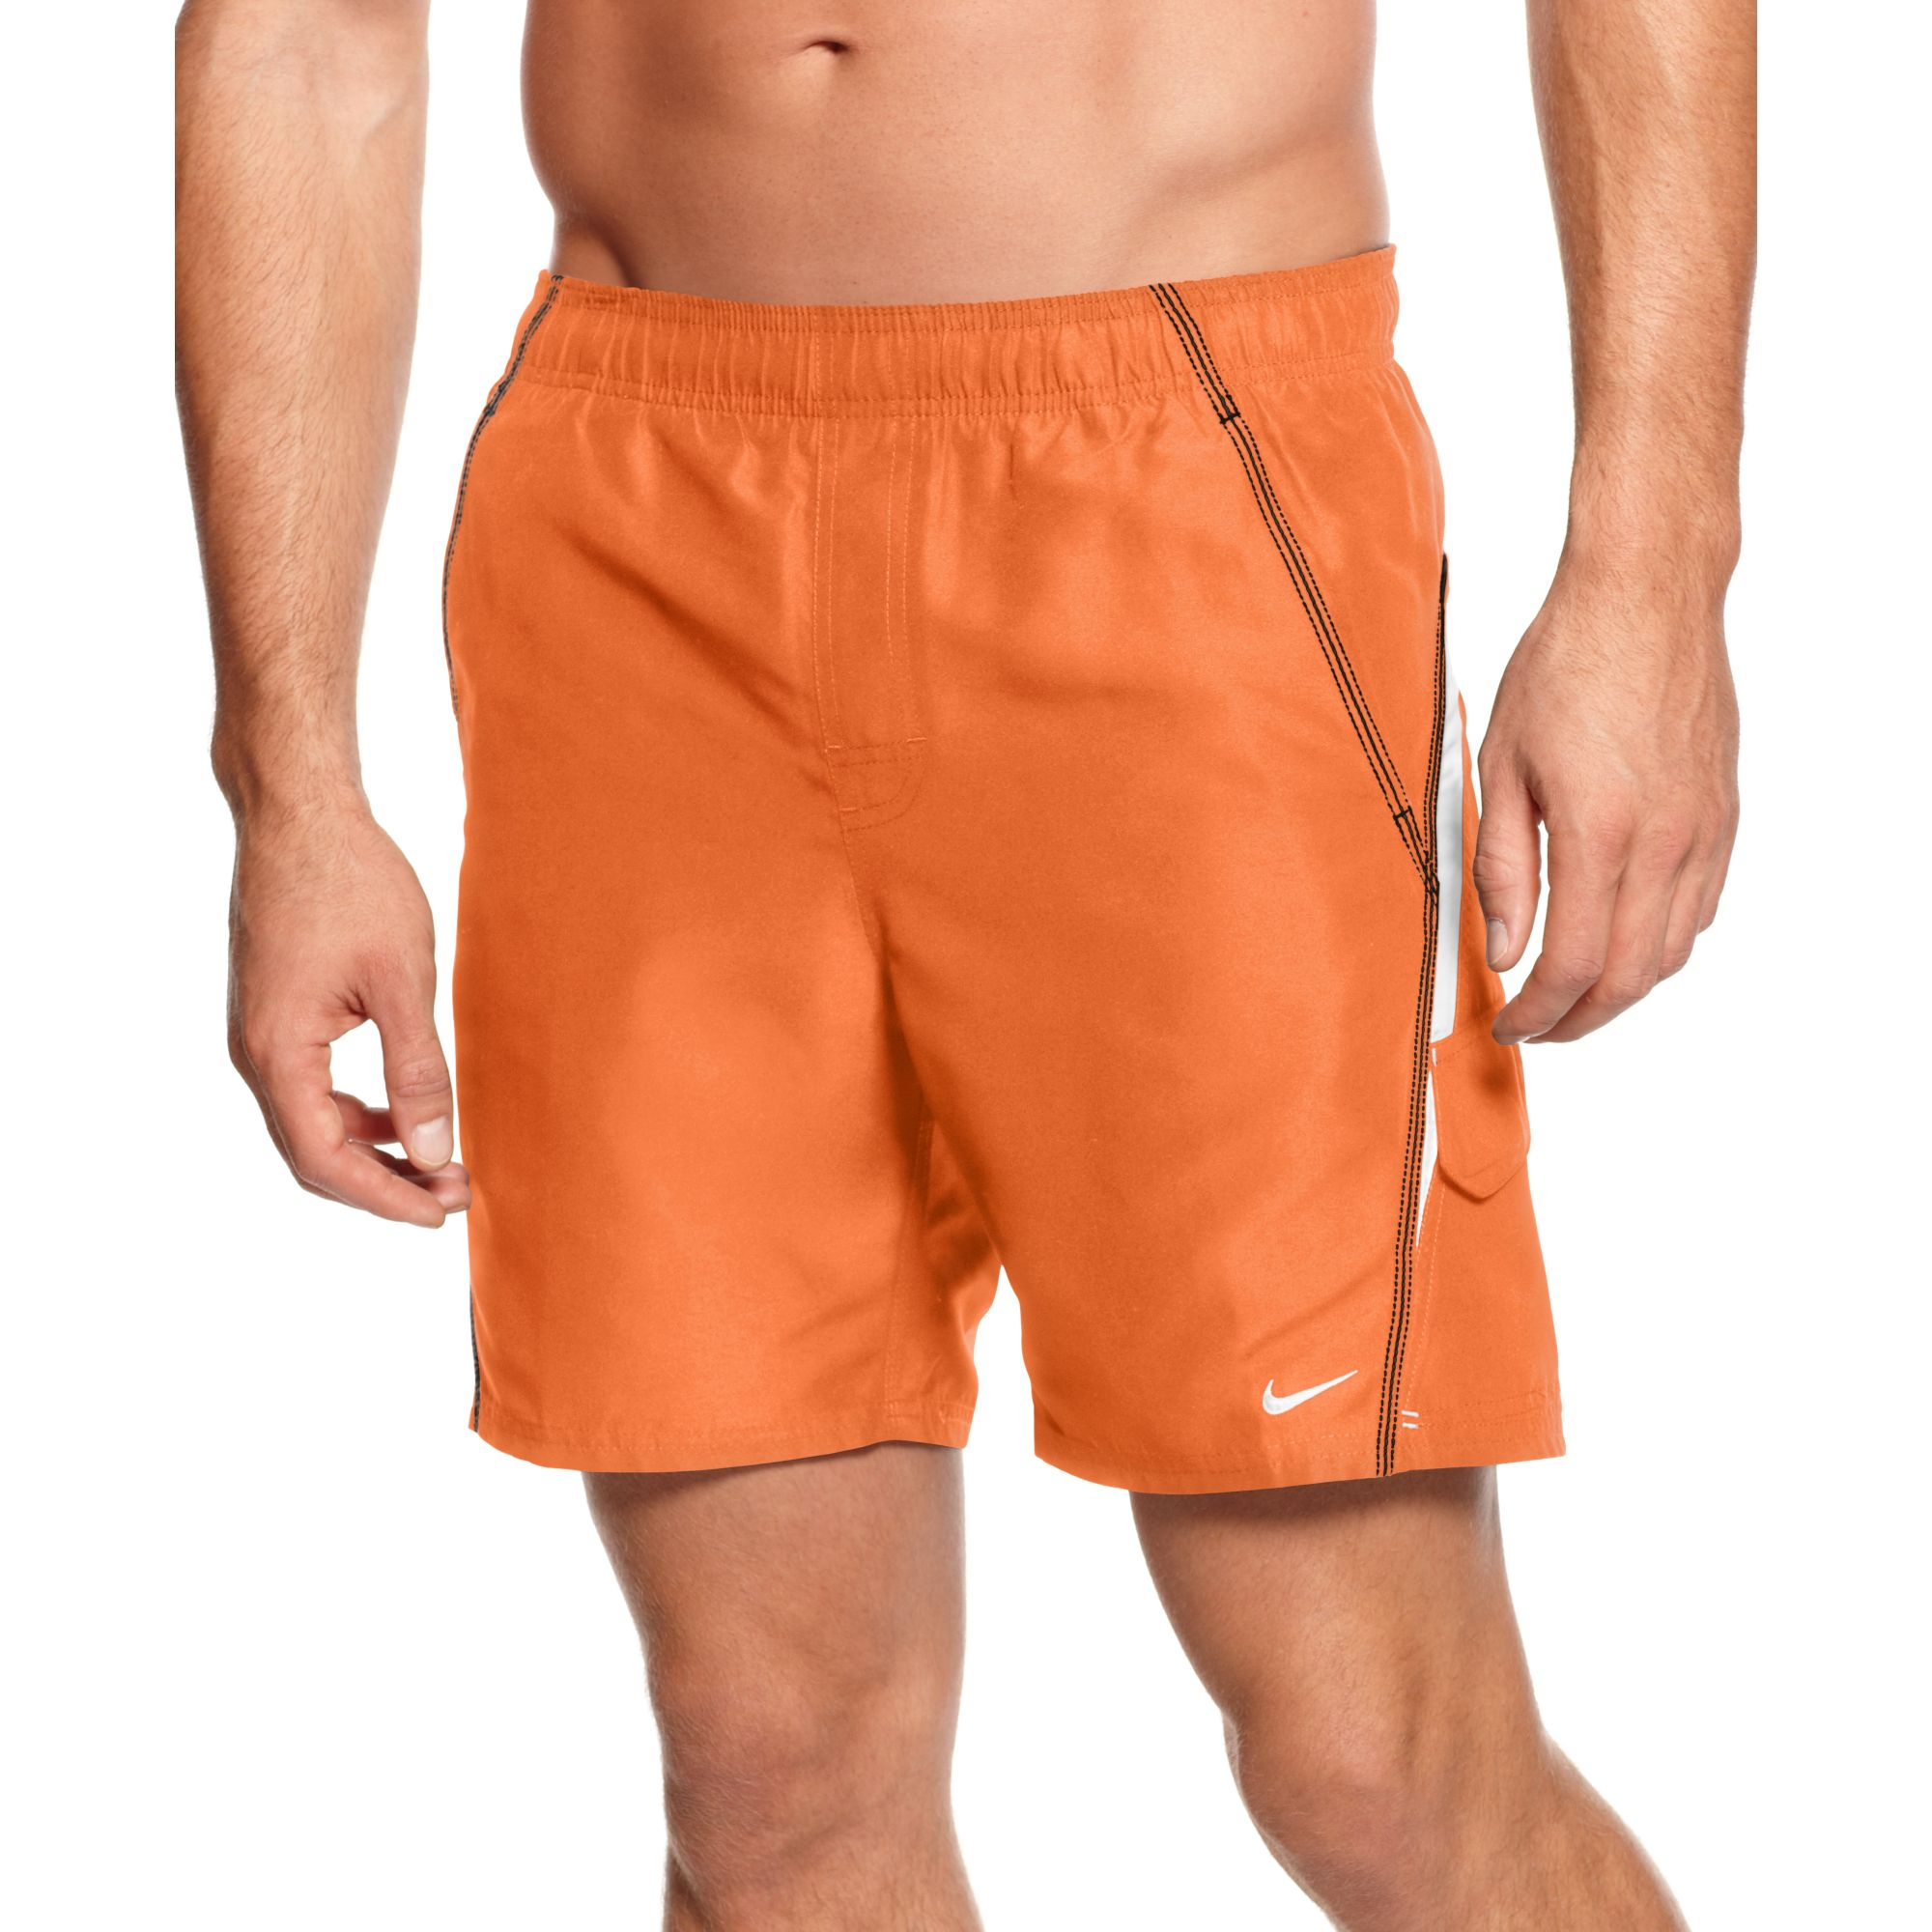 Nike Core Velocity 7 Volley Swim Trunks in Orange for Men - Lyst